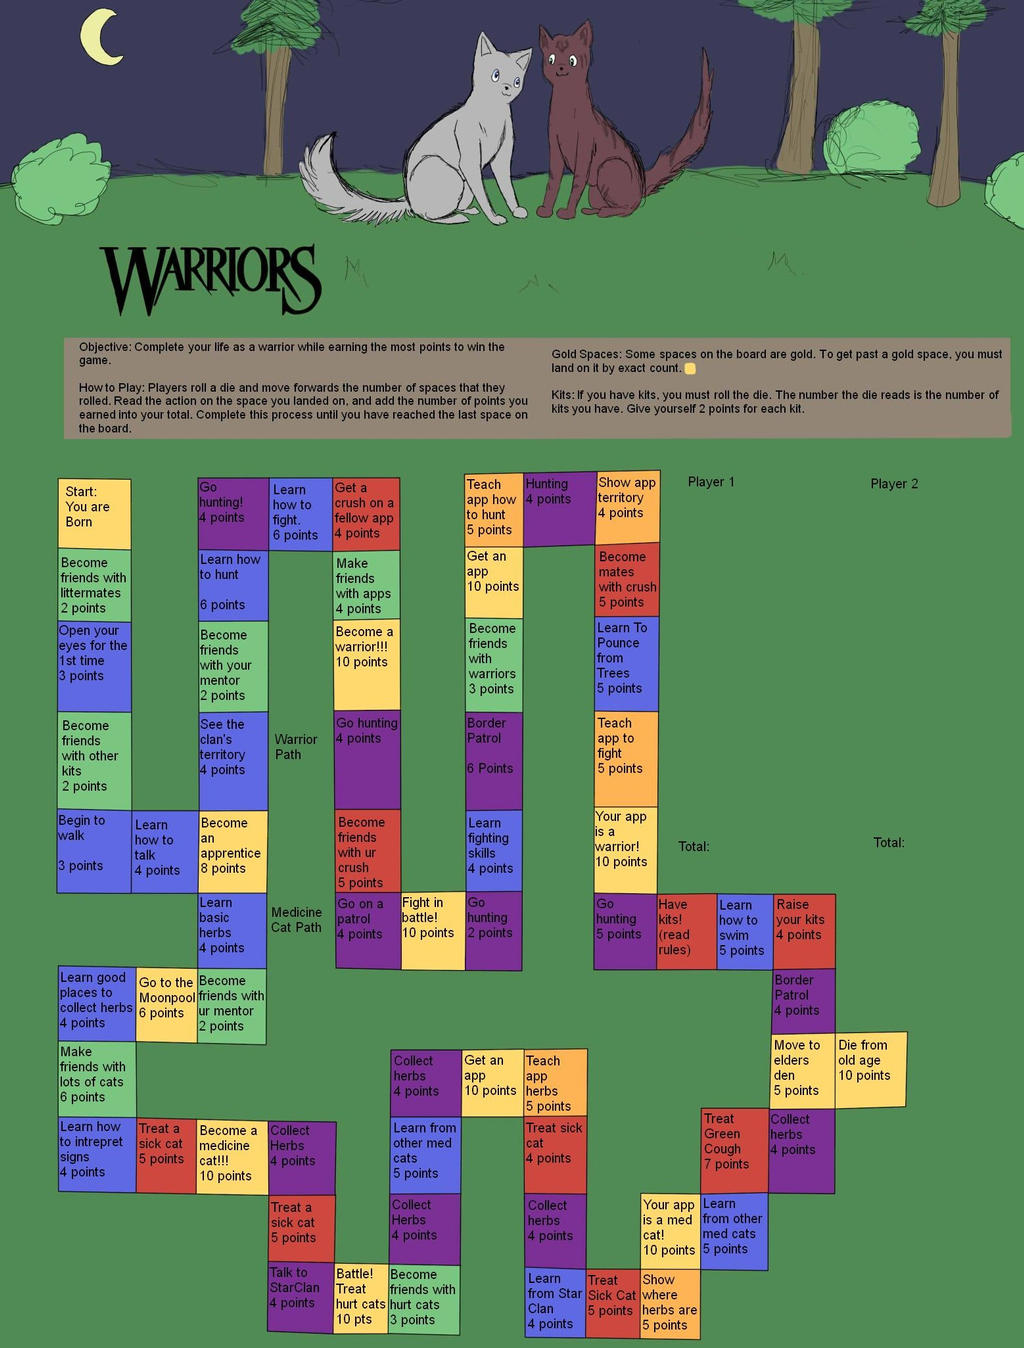 WARRIORS Board Game by amineefreak on DeviantArt